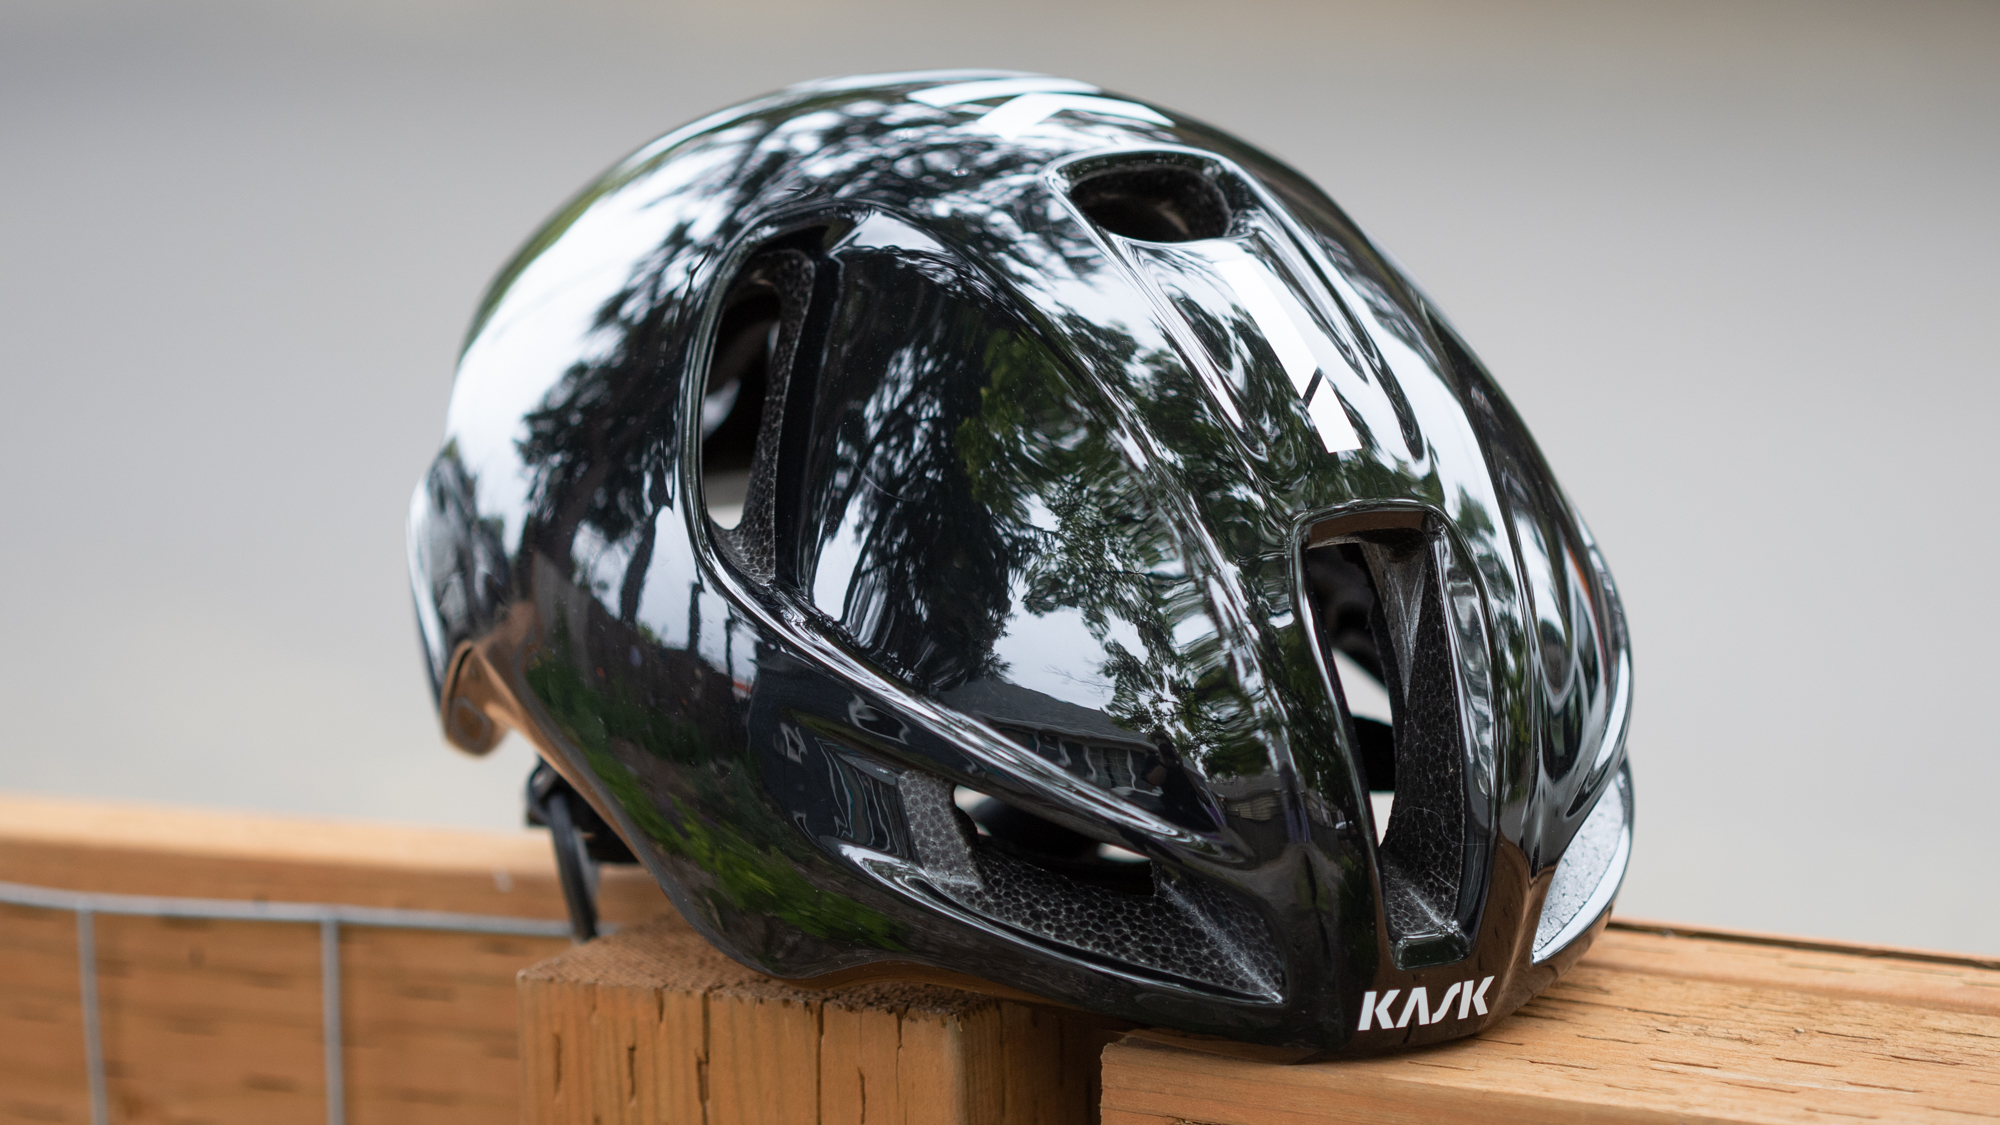 Kask Utopia aero helmet review | Cyclingnews